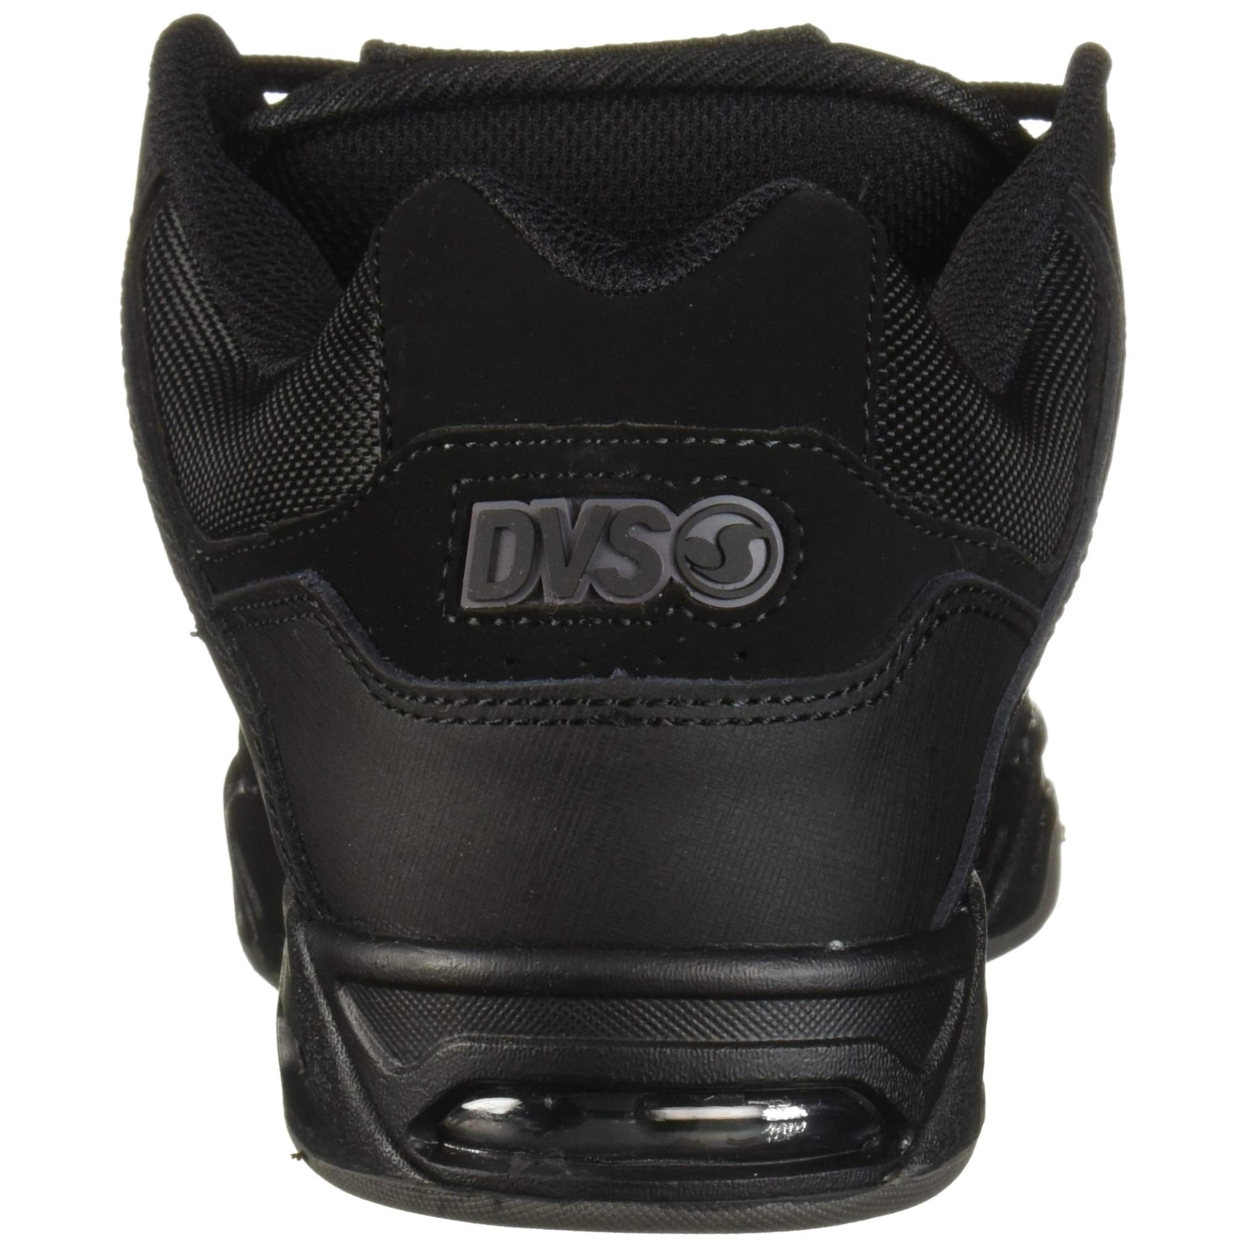 Dvs Footwear Mens Men's Enduro HEIR Skate Shoe BLACK BLACK NUBUCK - BLACK BLACK NUBUCK, 11.5-M